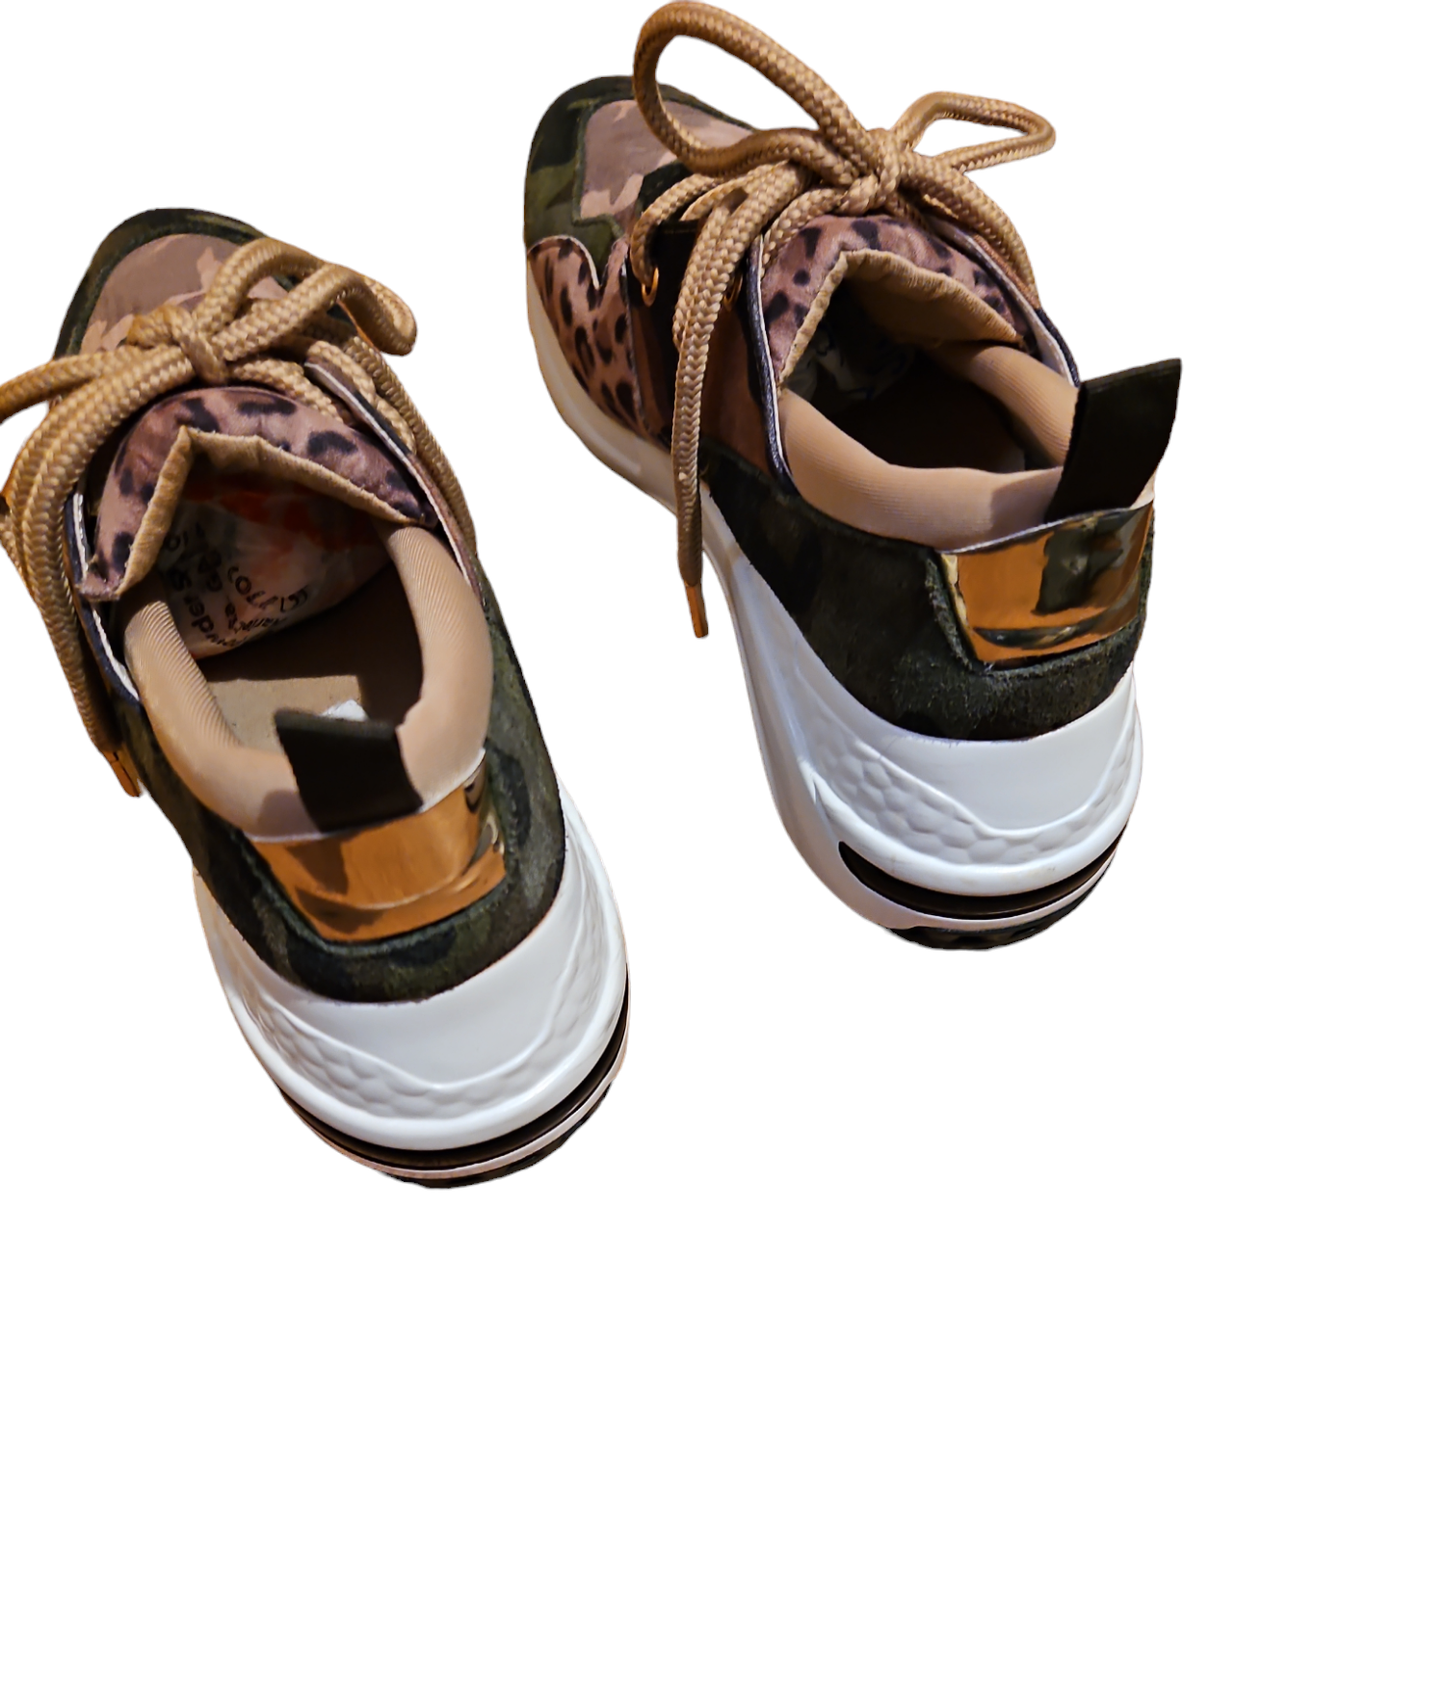 Steve Madden Cliffhanger Camouflage Sneakers Sz 7.5